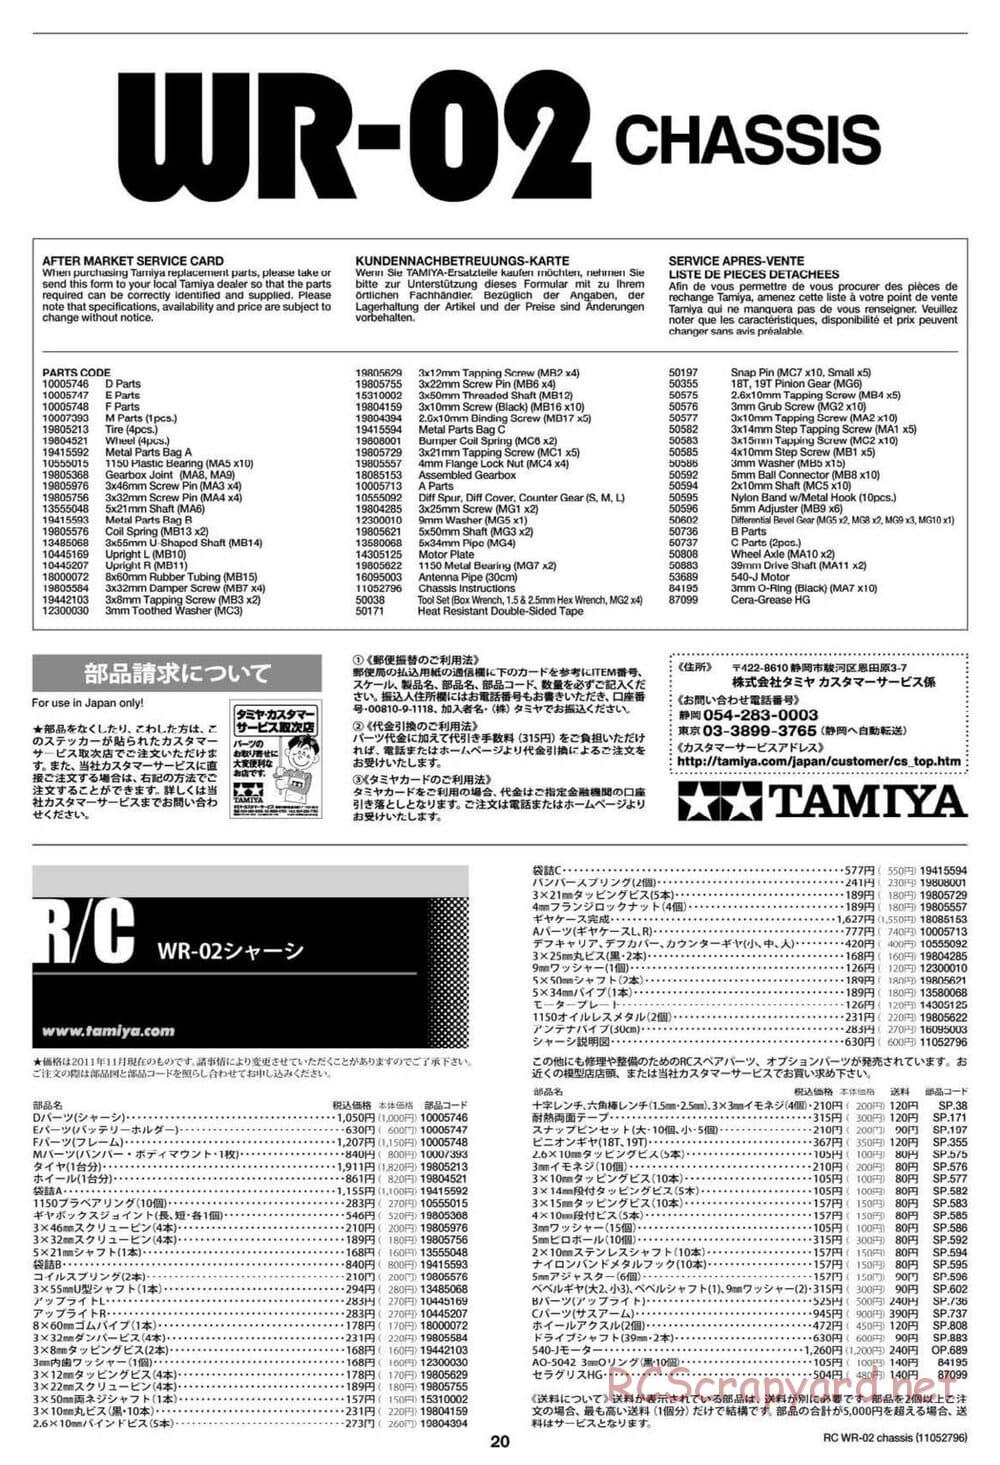 Tamiya - WR-02 Chassis - Manual - Page 20